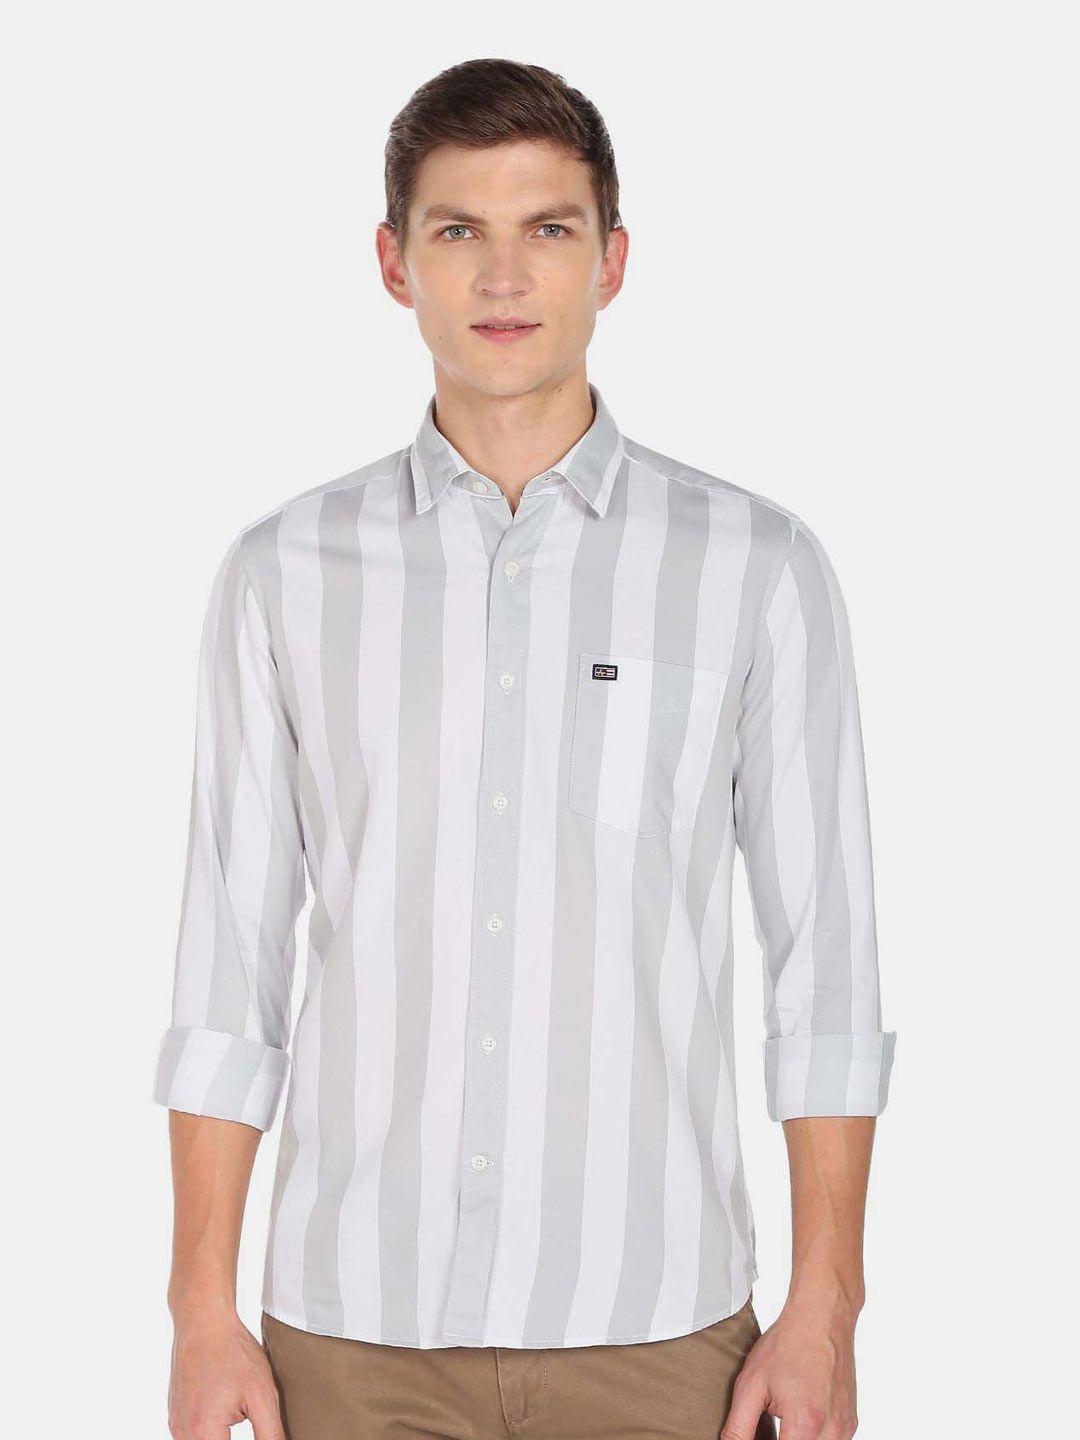 arrow sport vertical striped pure cotton casual shirt